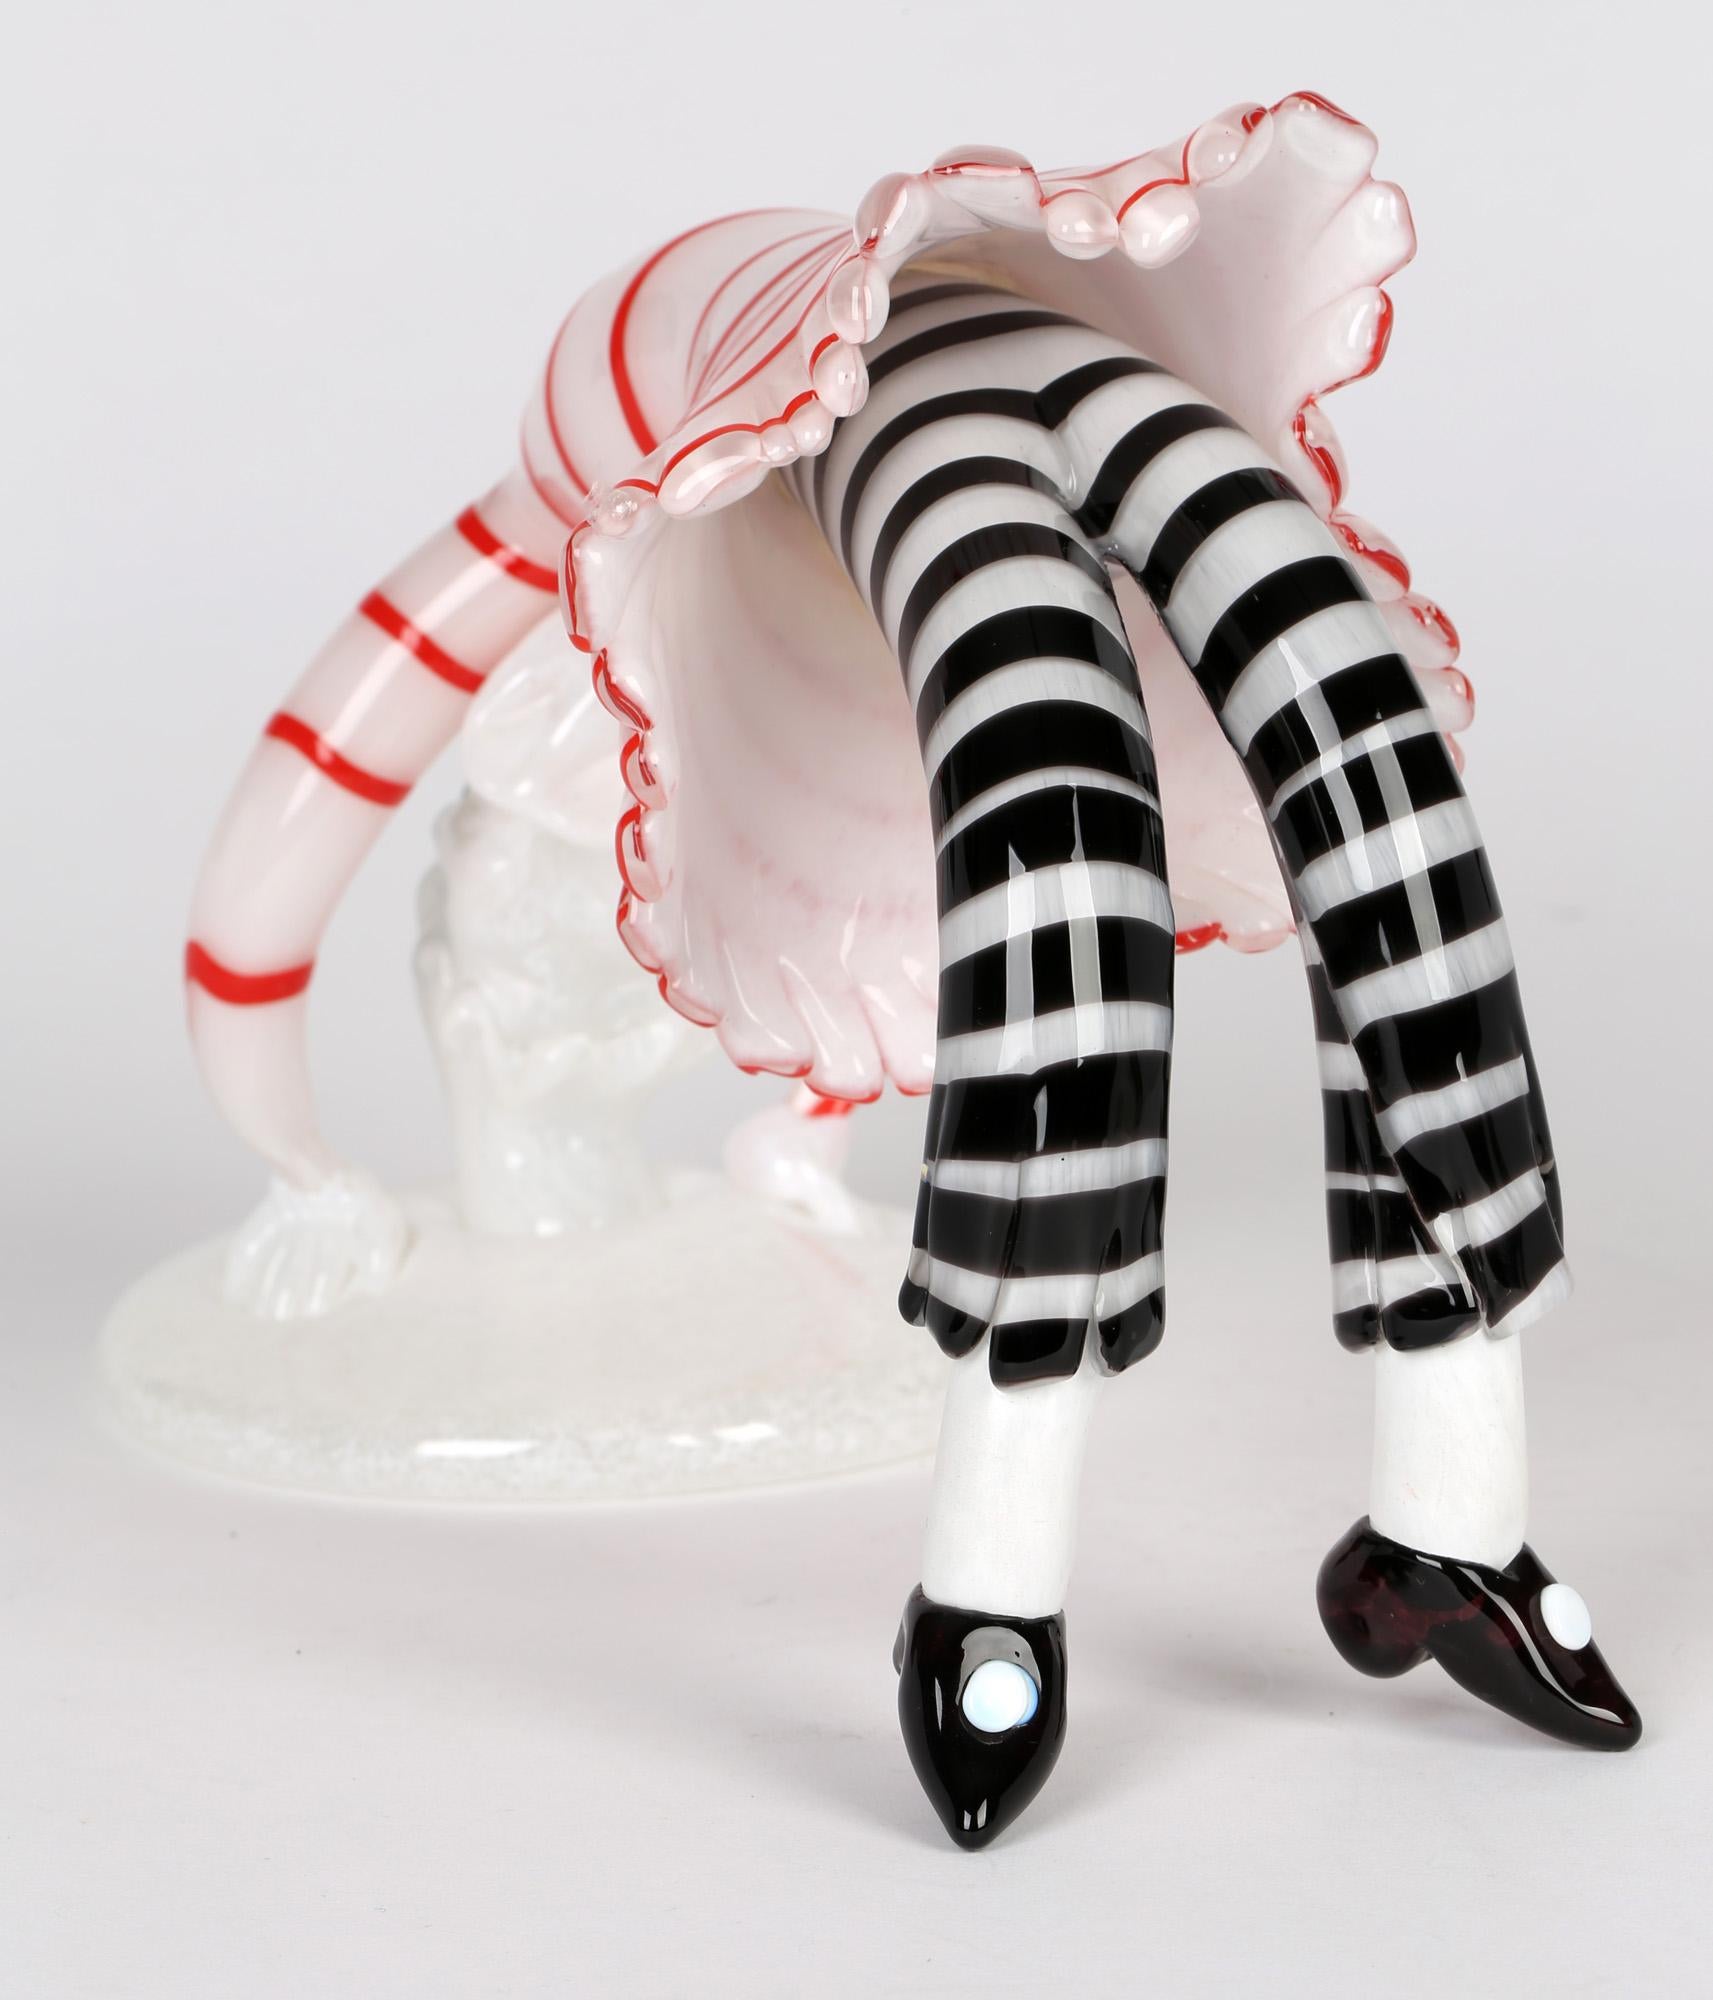 Franco Toffolo Commedia Dell'Arte Glass Clown Acrobat Figure For Sale 6